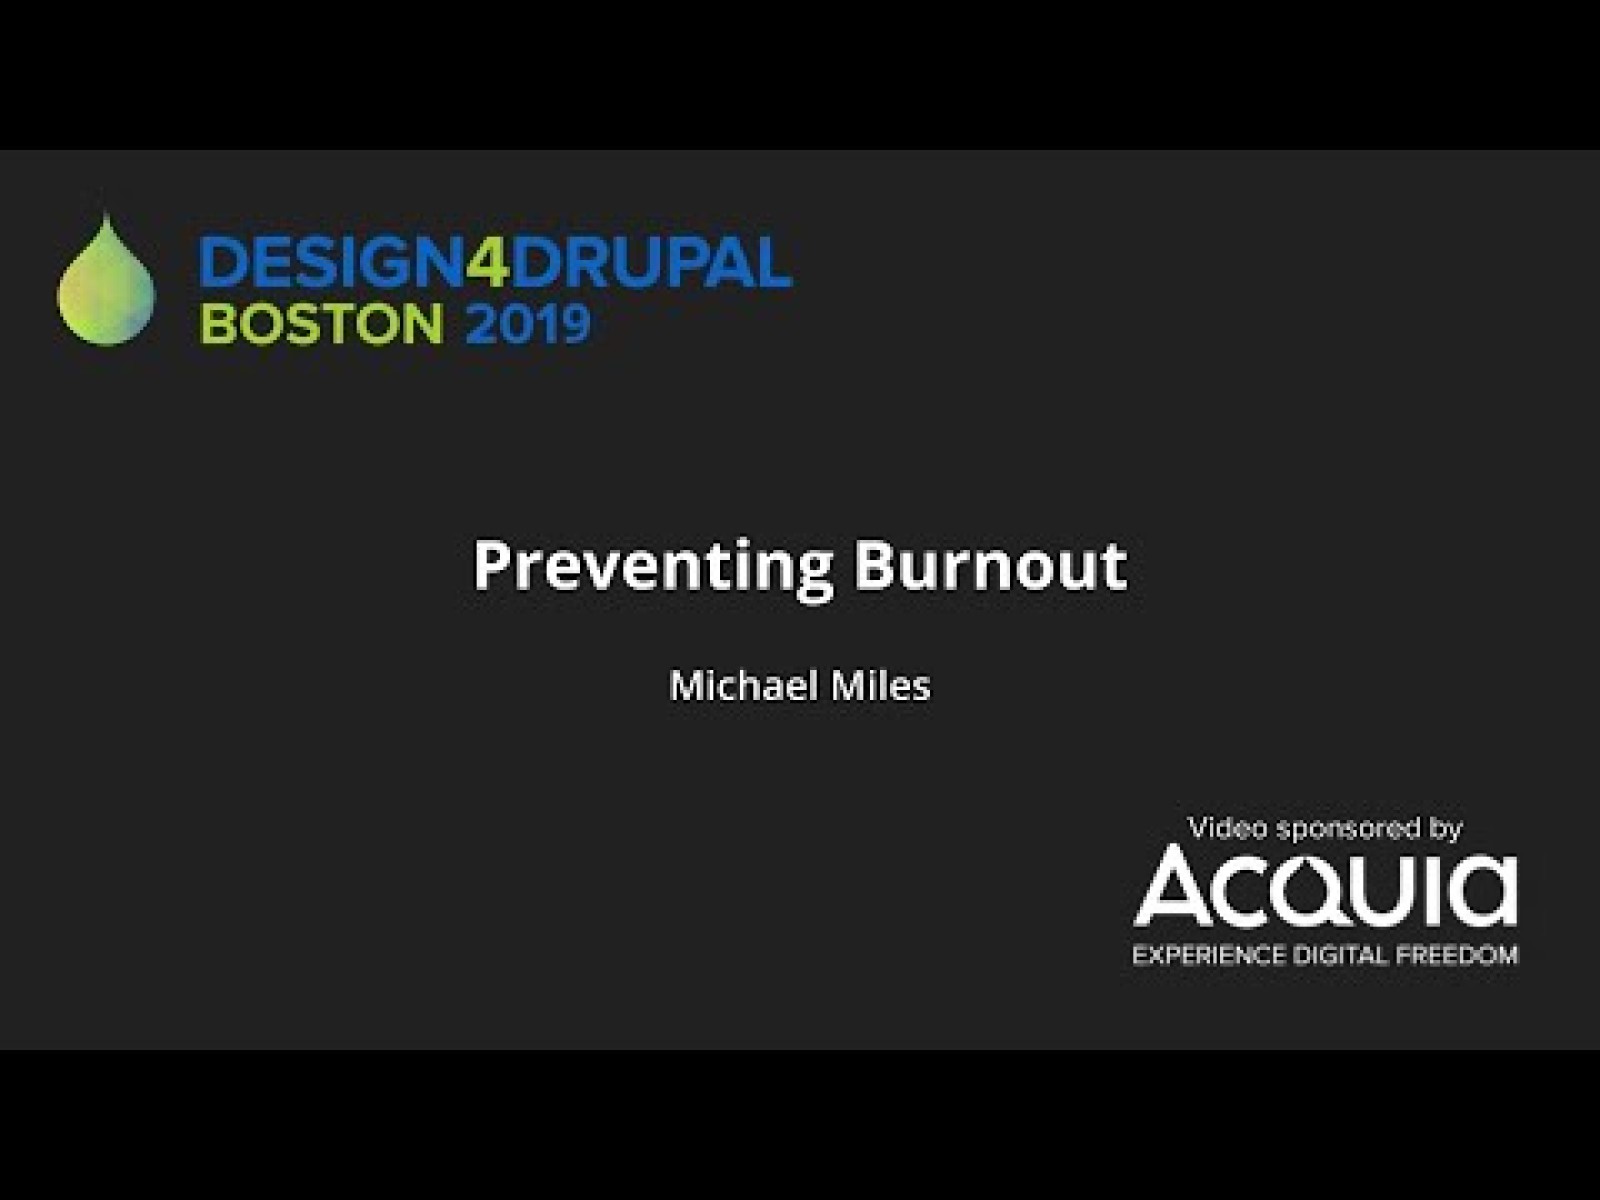 Preventing burnout